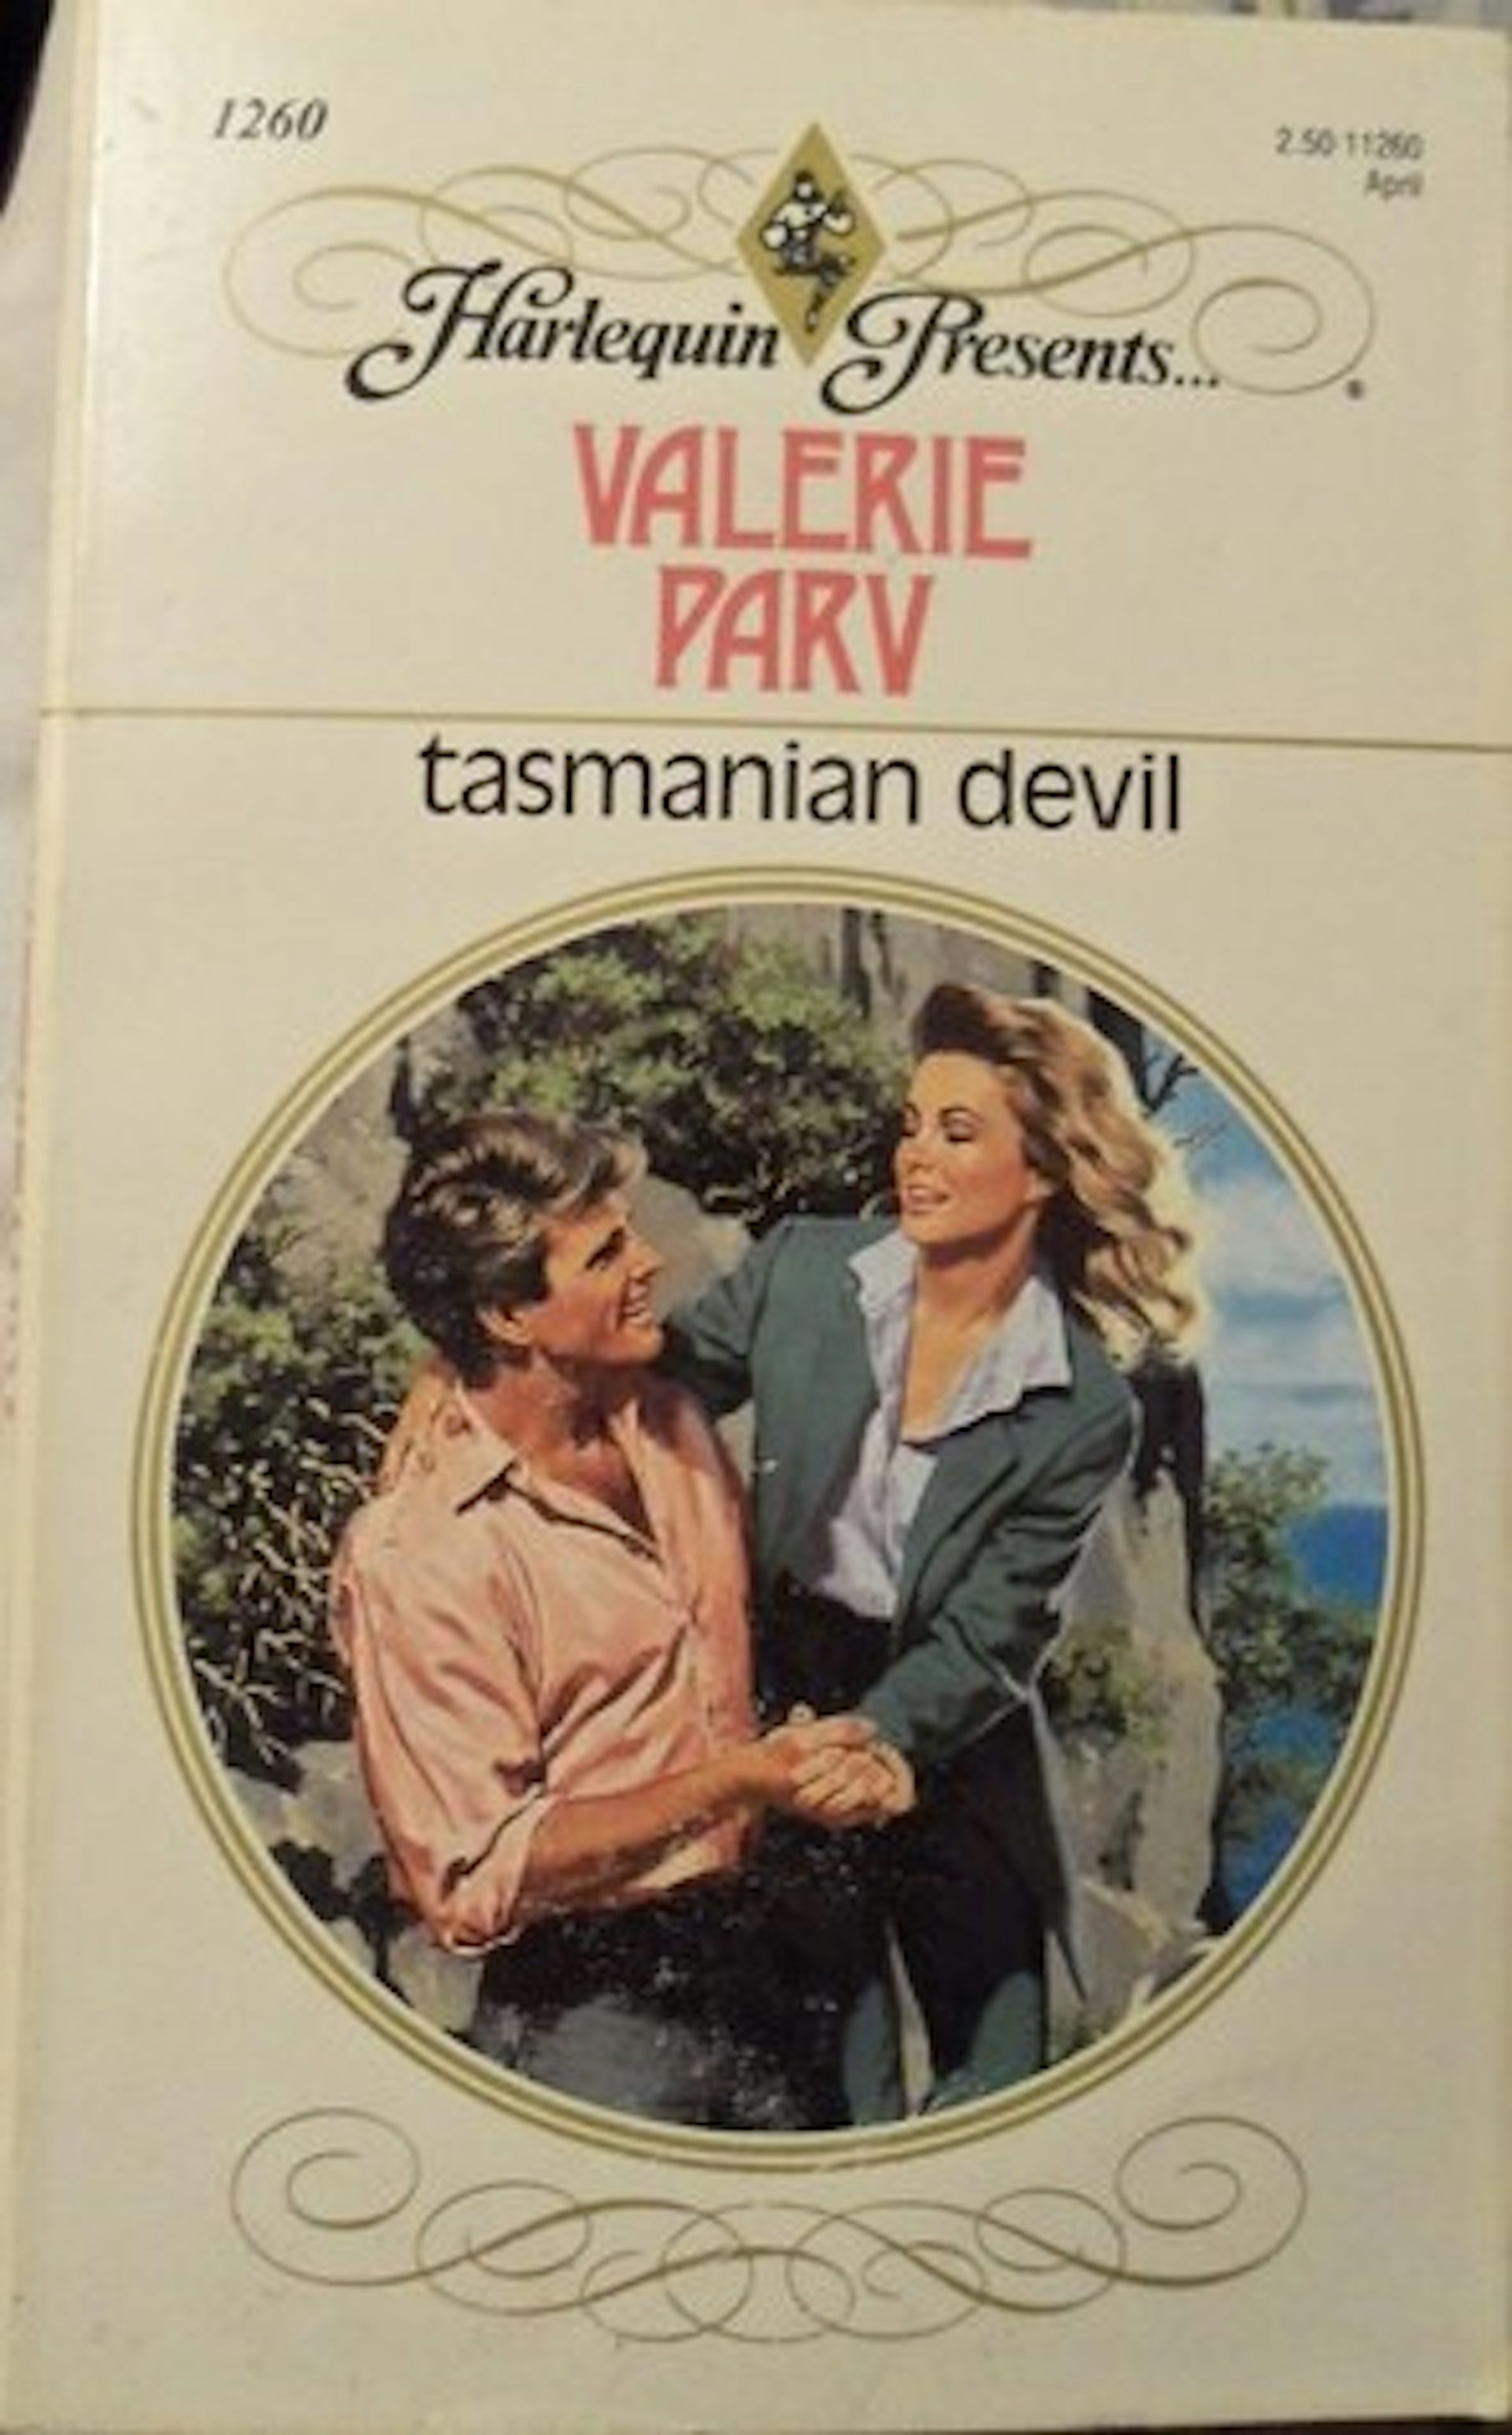 1980s harlequin romance novels